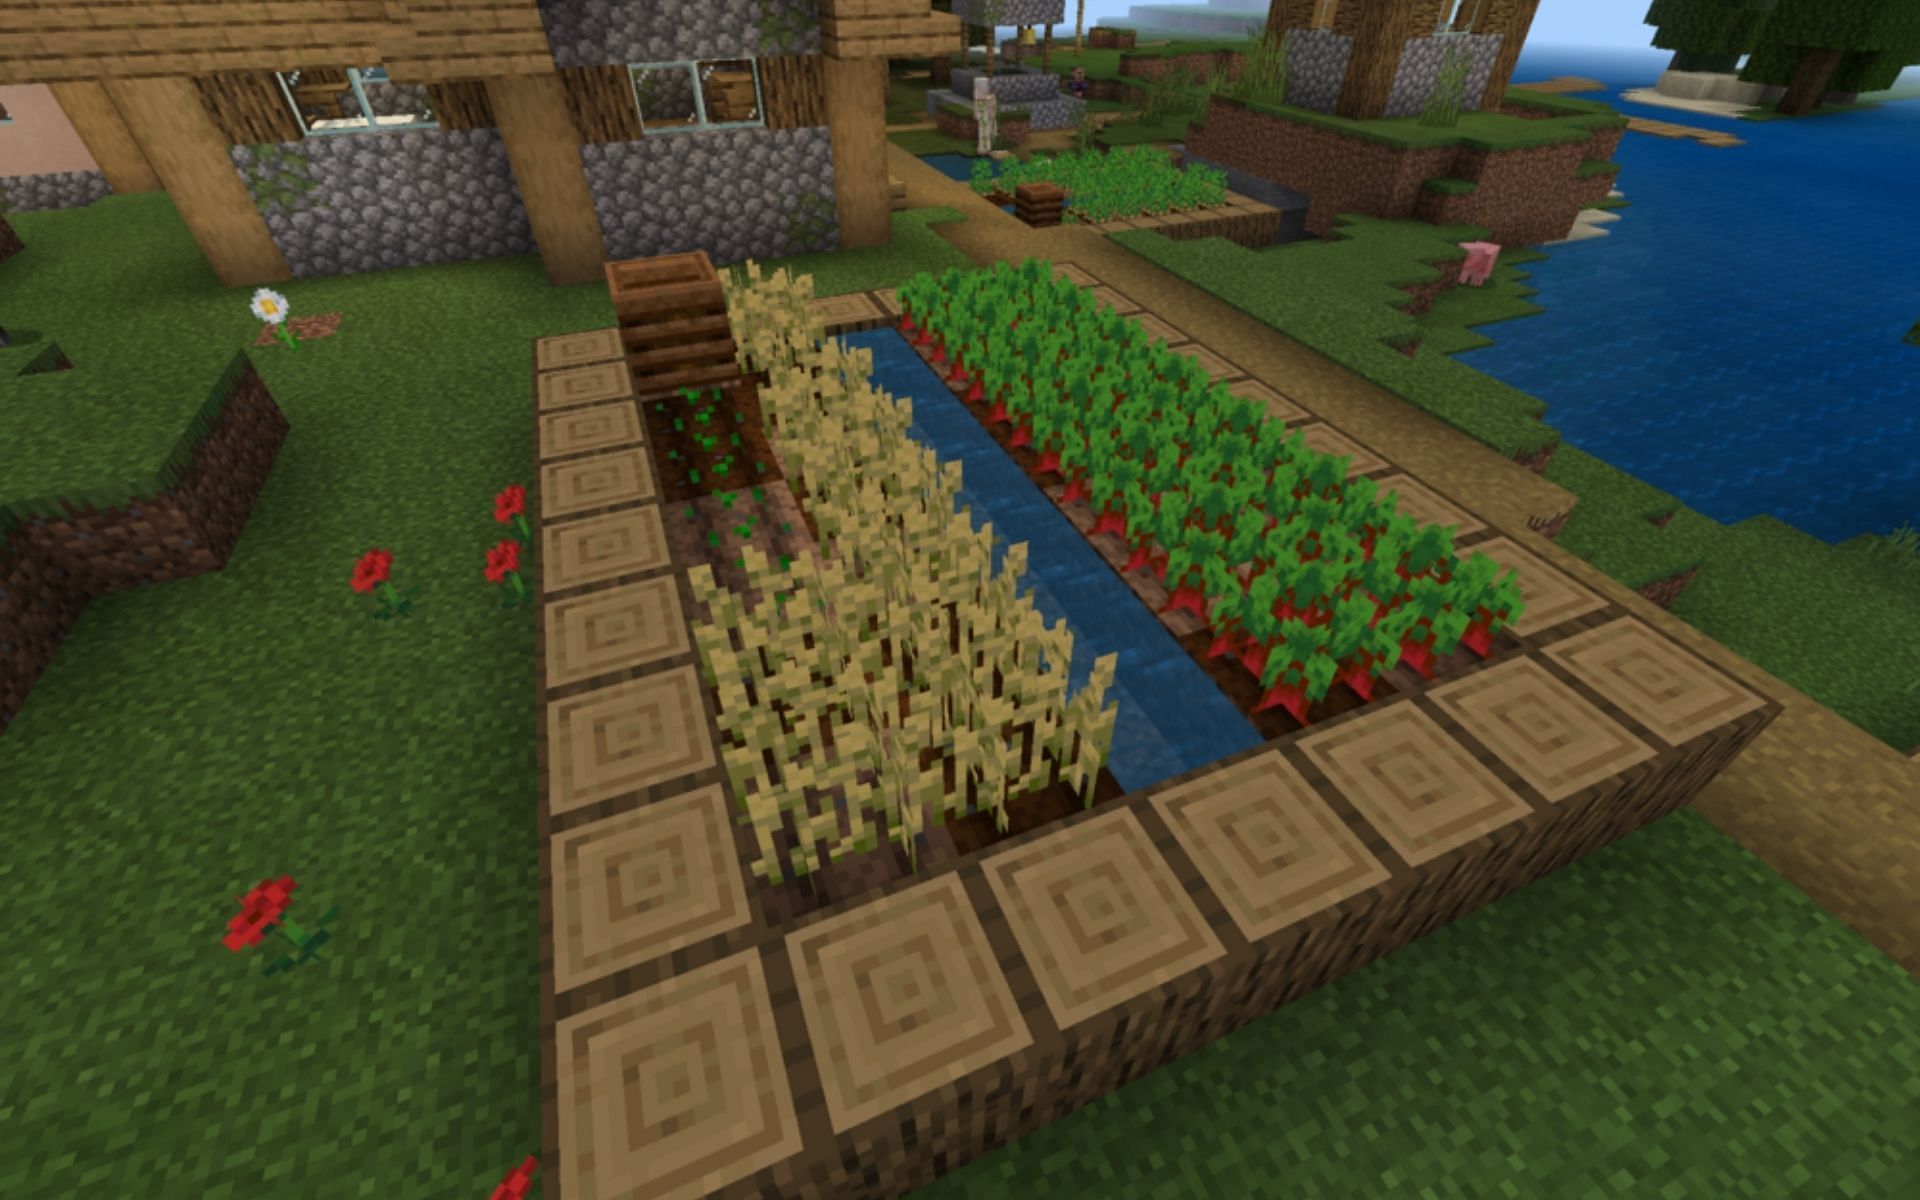 Village Wheat and Beetroot farm (Image via Minecraft Wiki)